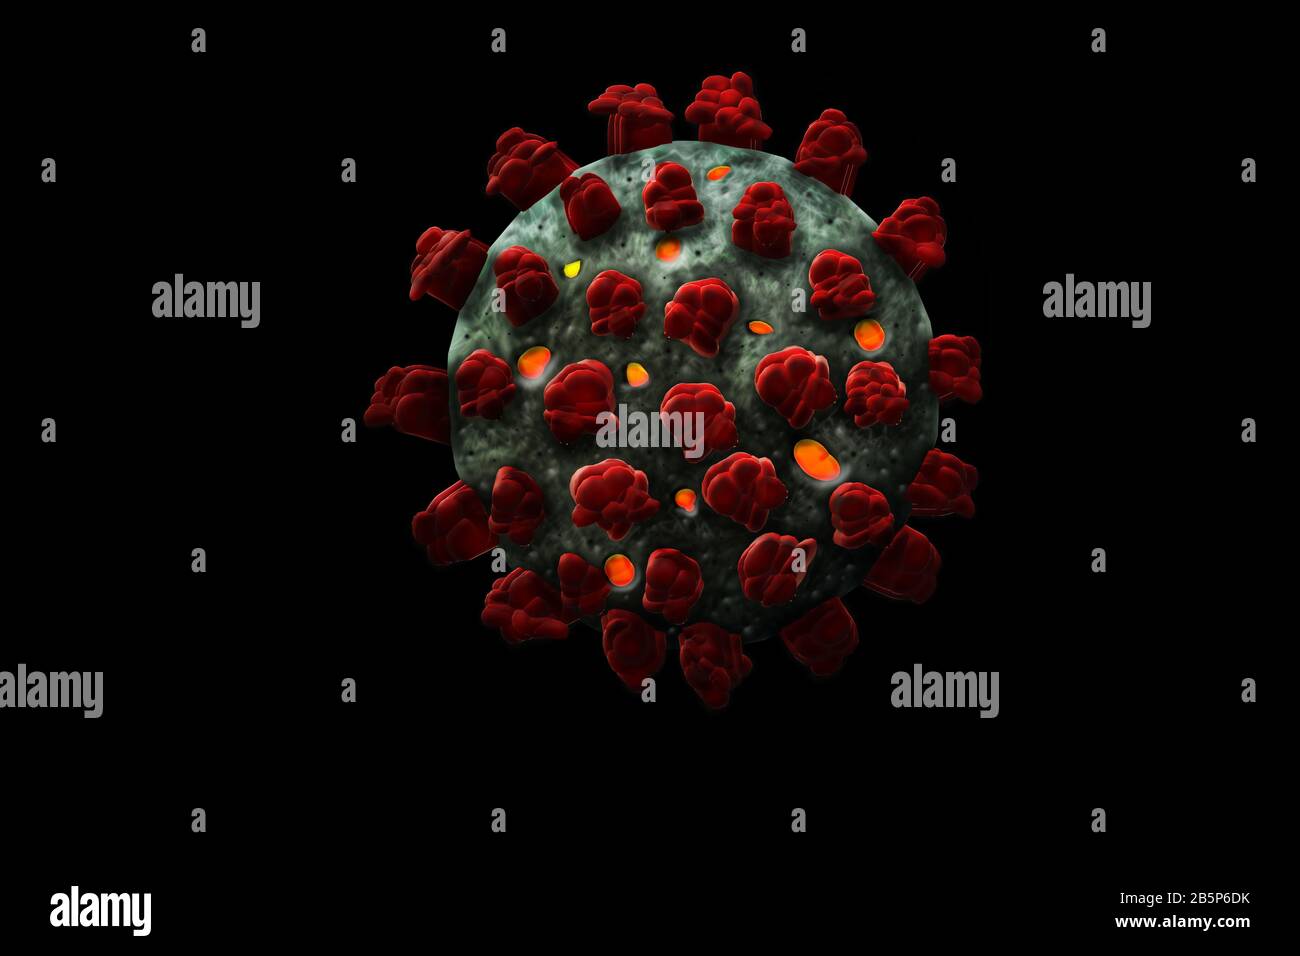 Coronavirus SARS-CoV-2 (Covid-19), HIV virus, SARS virus, flu virus. Stock Photo